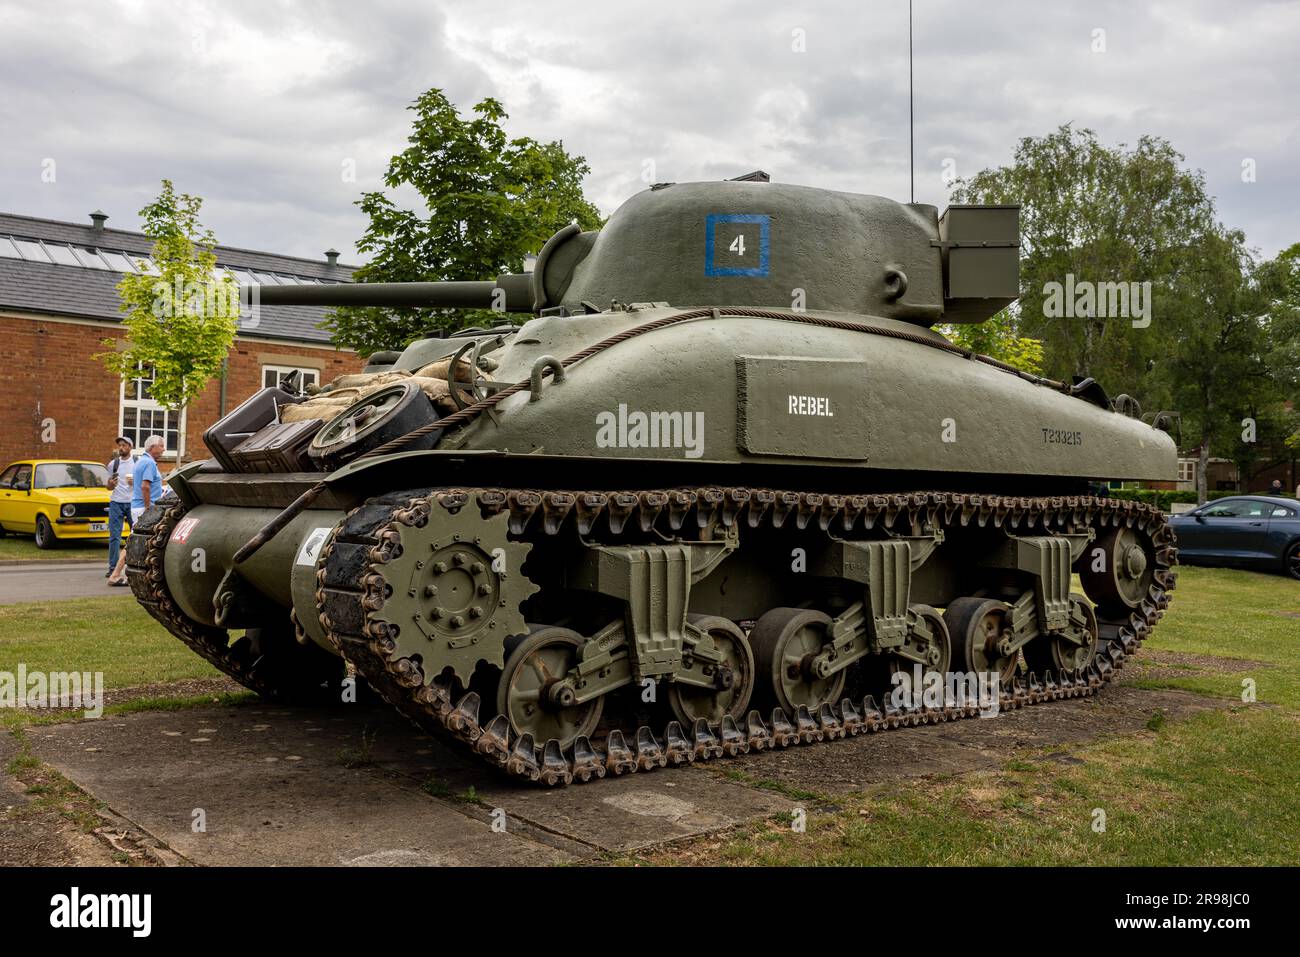 Sherman m4a1 medium tank hi-res stock photography and images - Alamy